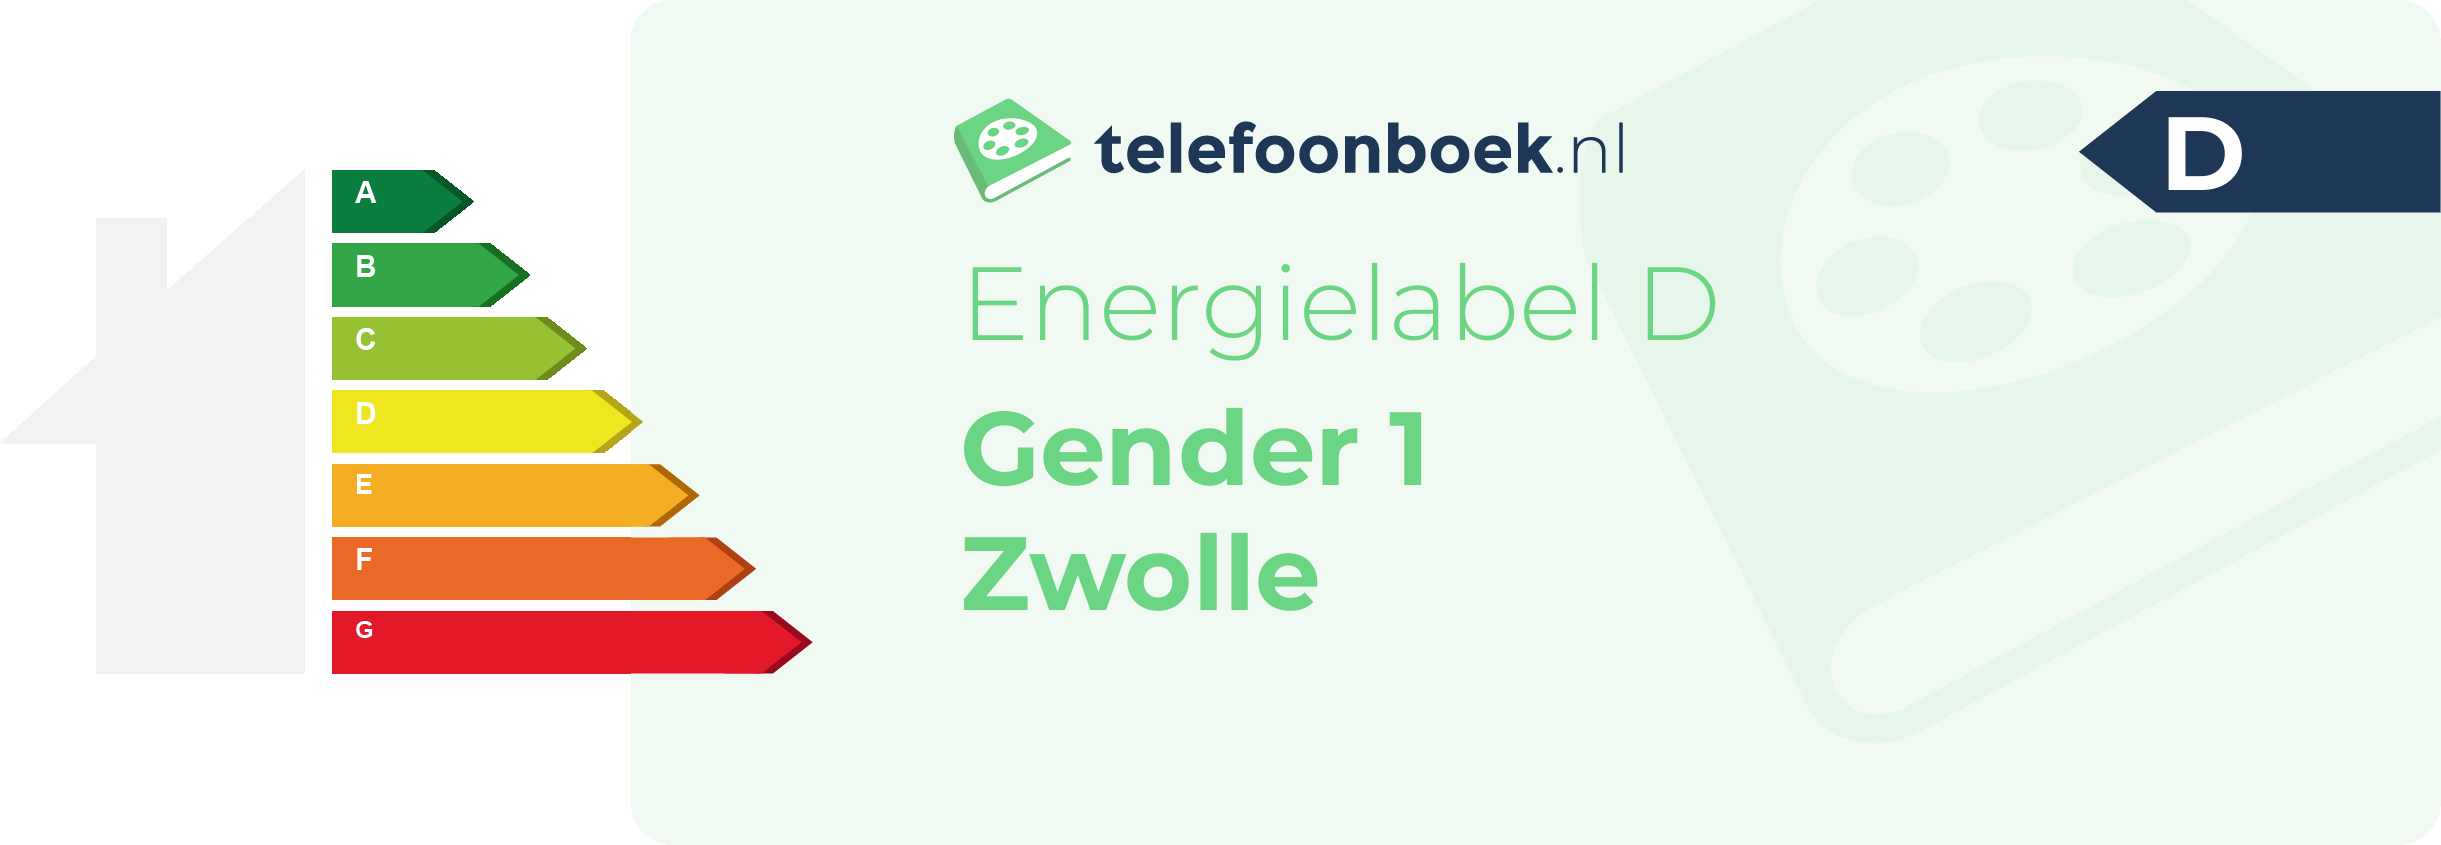 Energielabel Gender 1 Zwolle